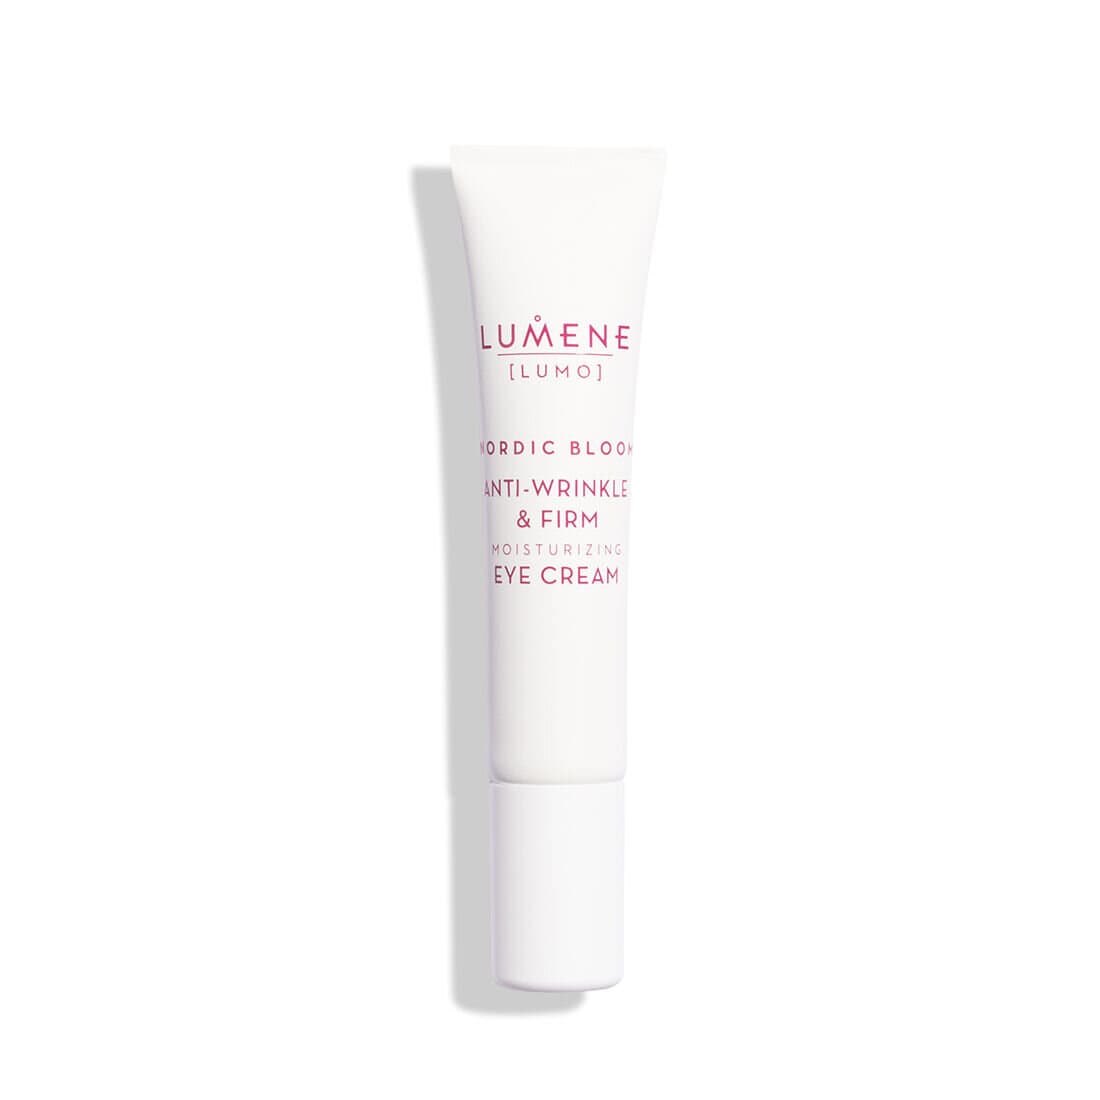 Picture of Lumene (Lumo) Nordic Bloom anti-wrinkle & firm eye cream